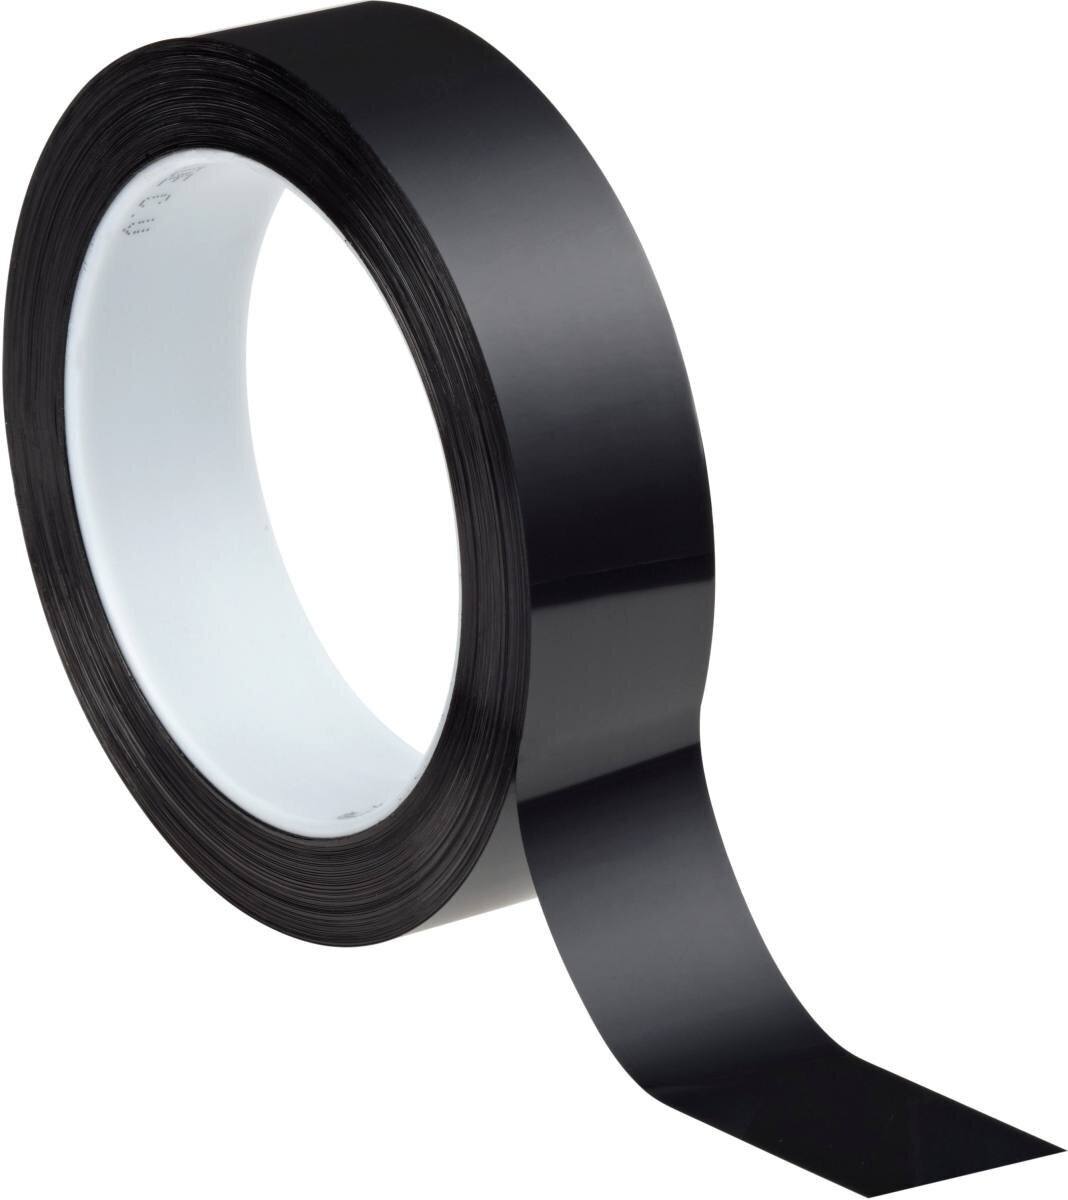 3M polyester adhesive tape 850 F, black, 25 mm x 66 m, 0.05 mm